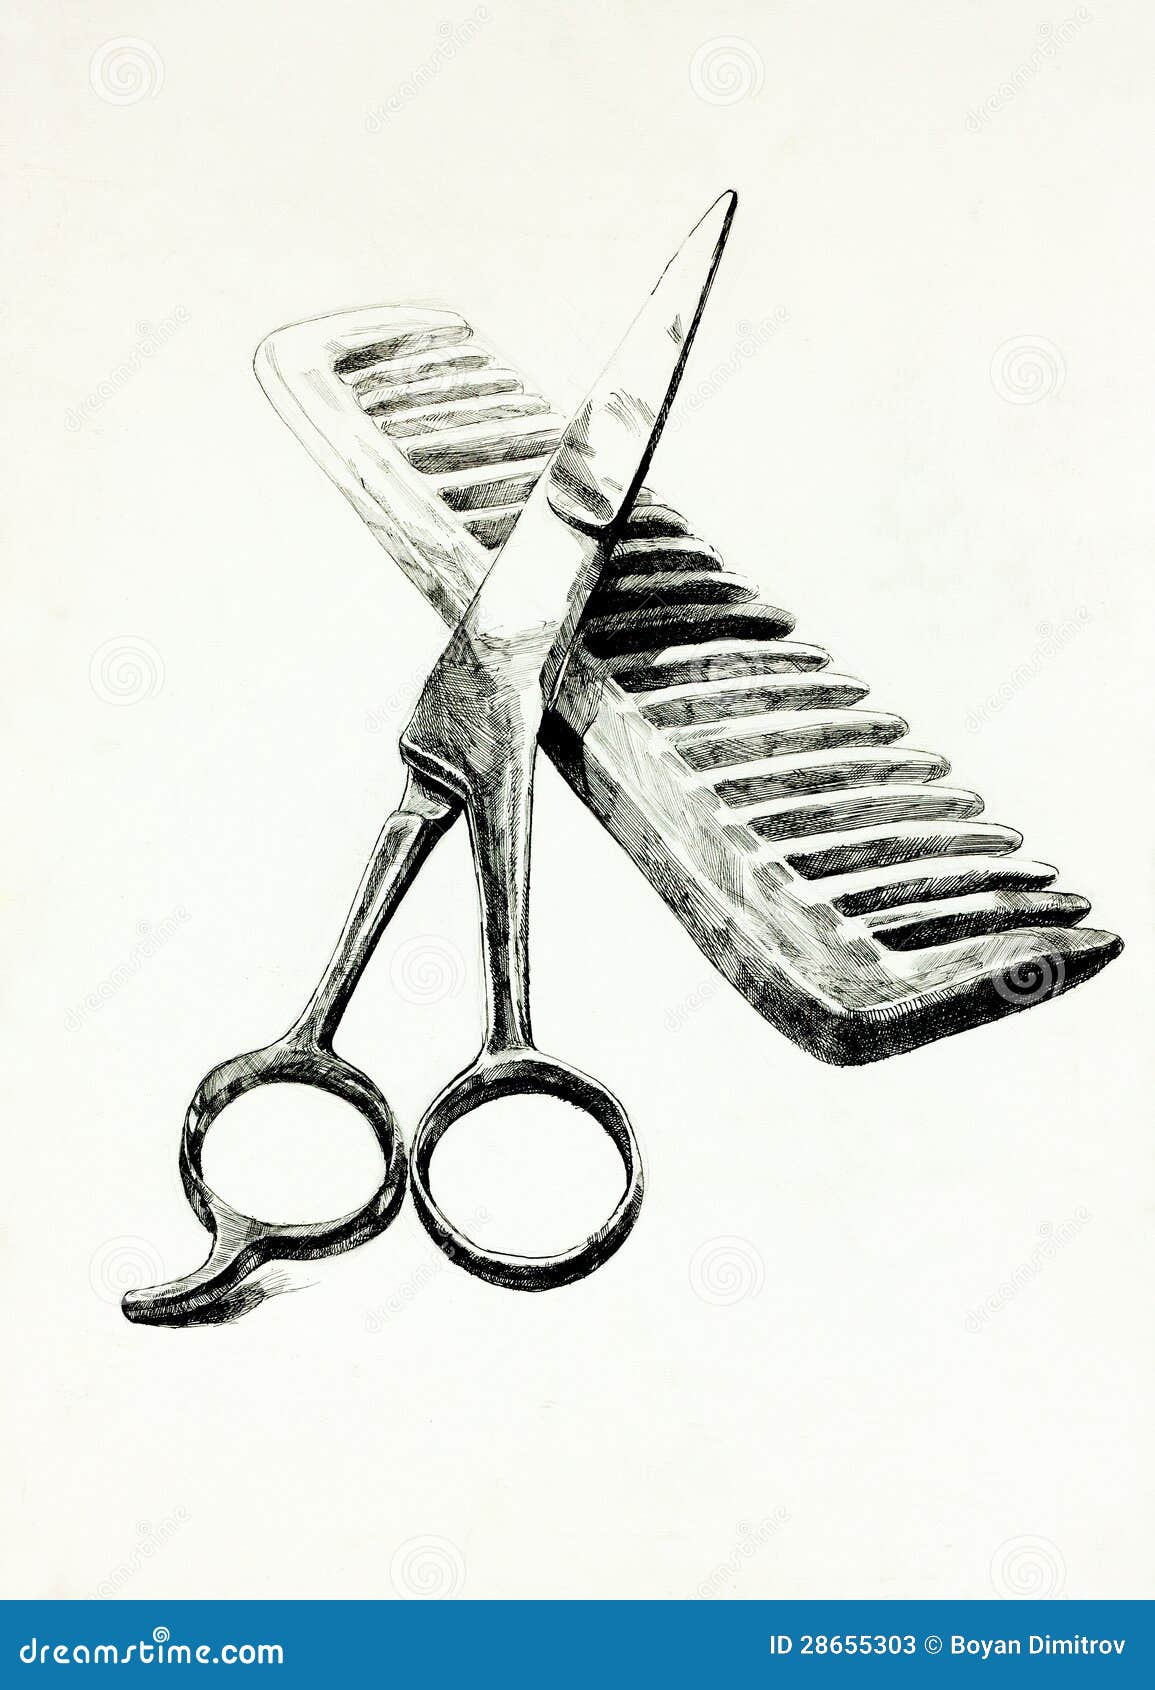 Vector Sketch Of Scissors Stock Illustration  Download Image Now   Ancient Antique Art  iStock